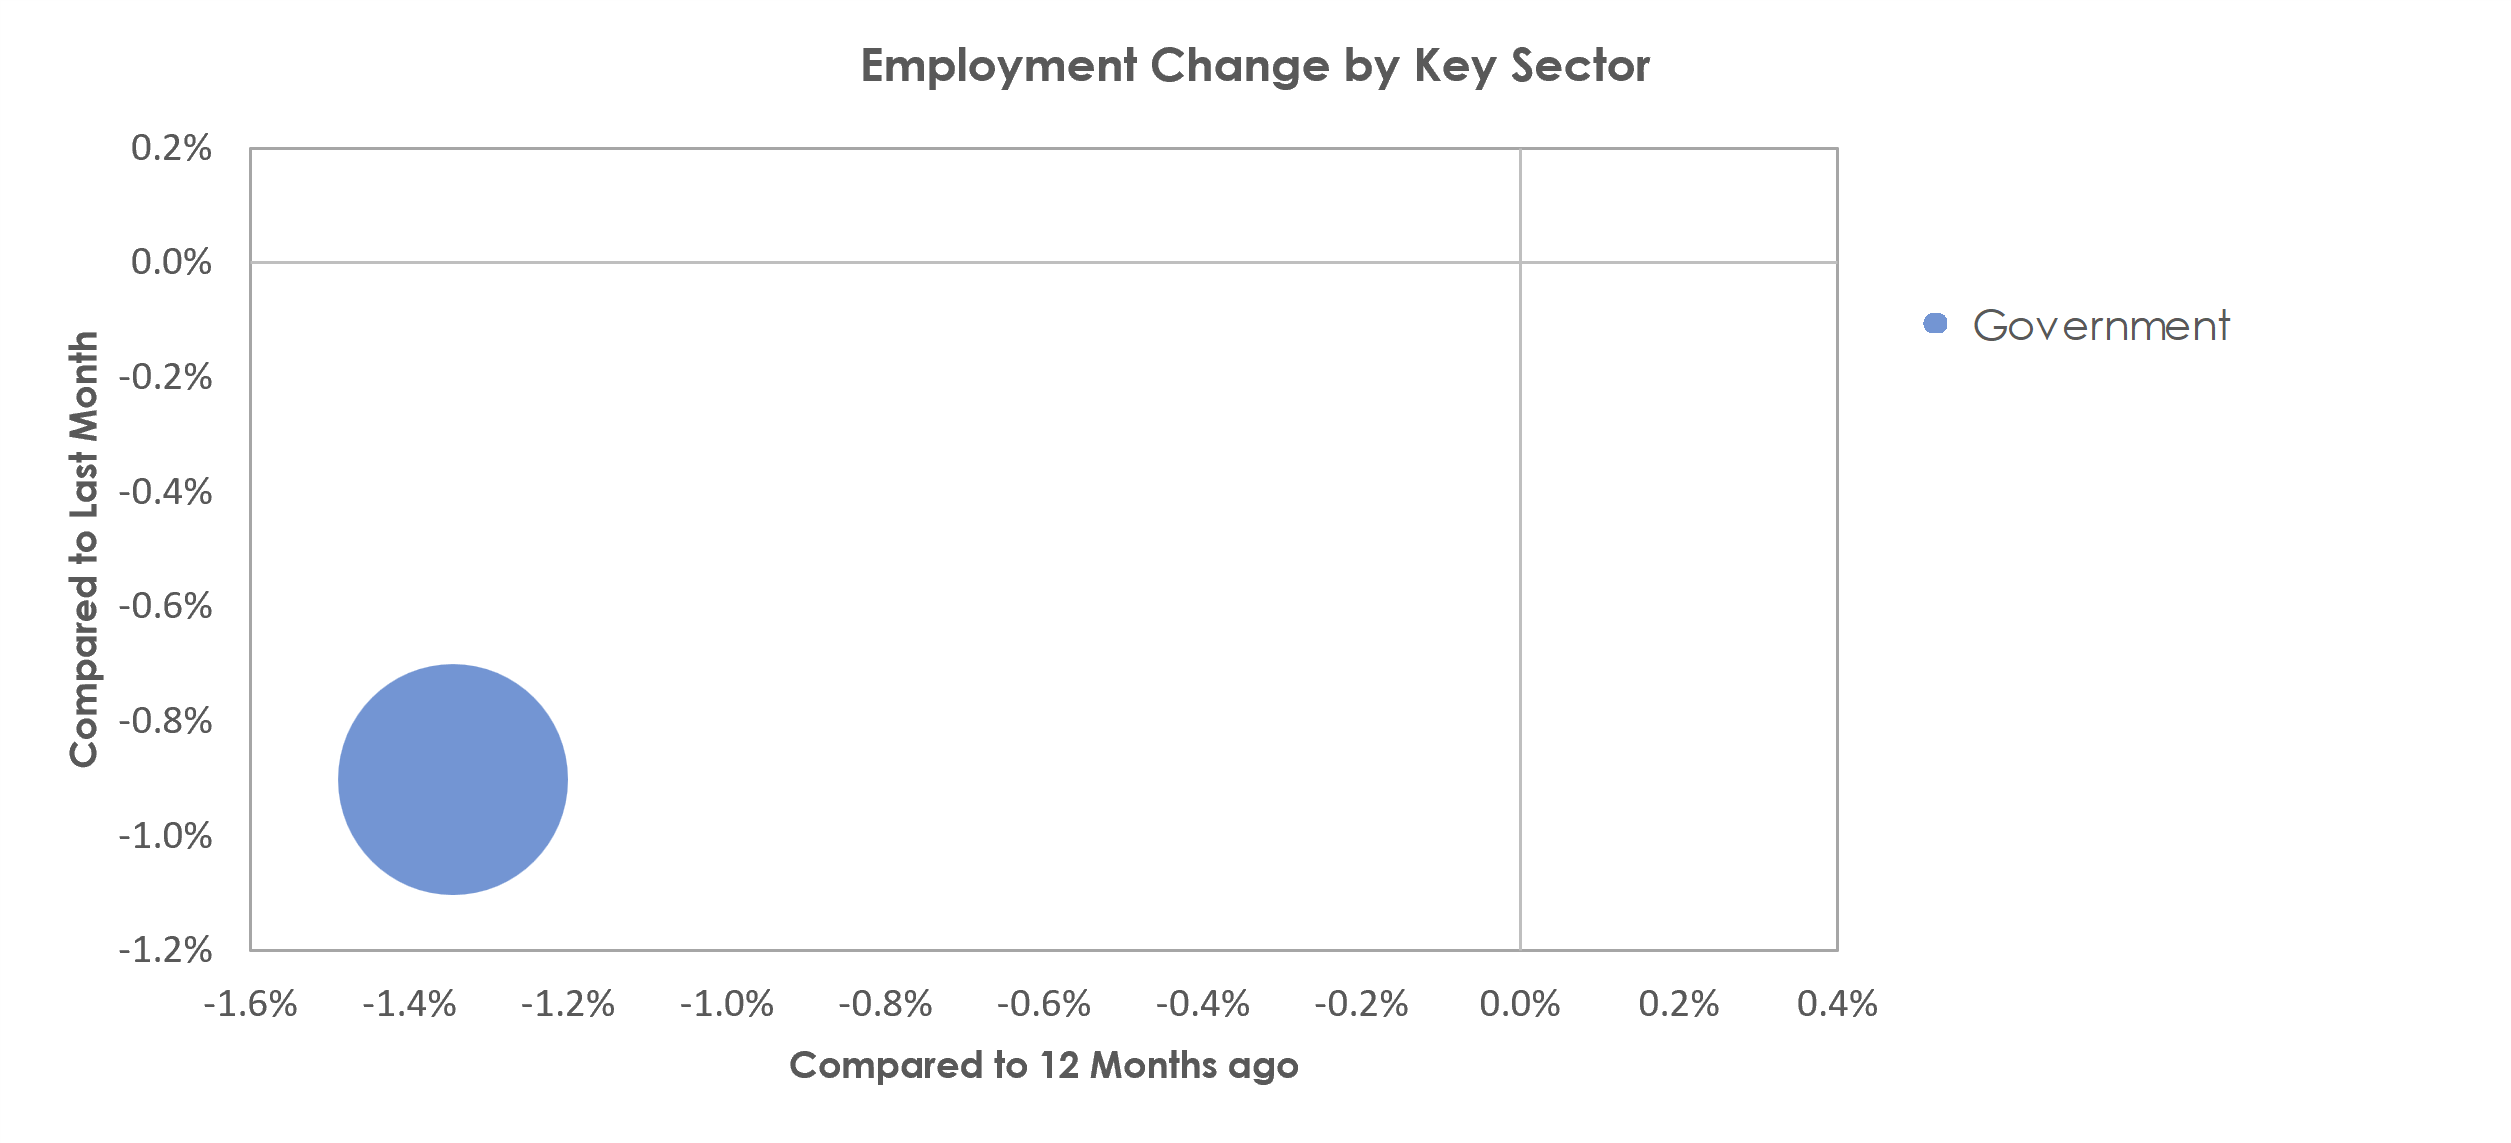 Blacksburg-Christiansburg-Radford, VA Unemployment by Industry July 2022